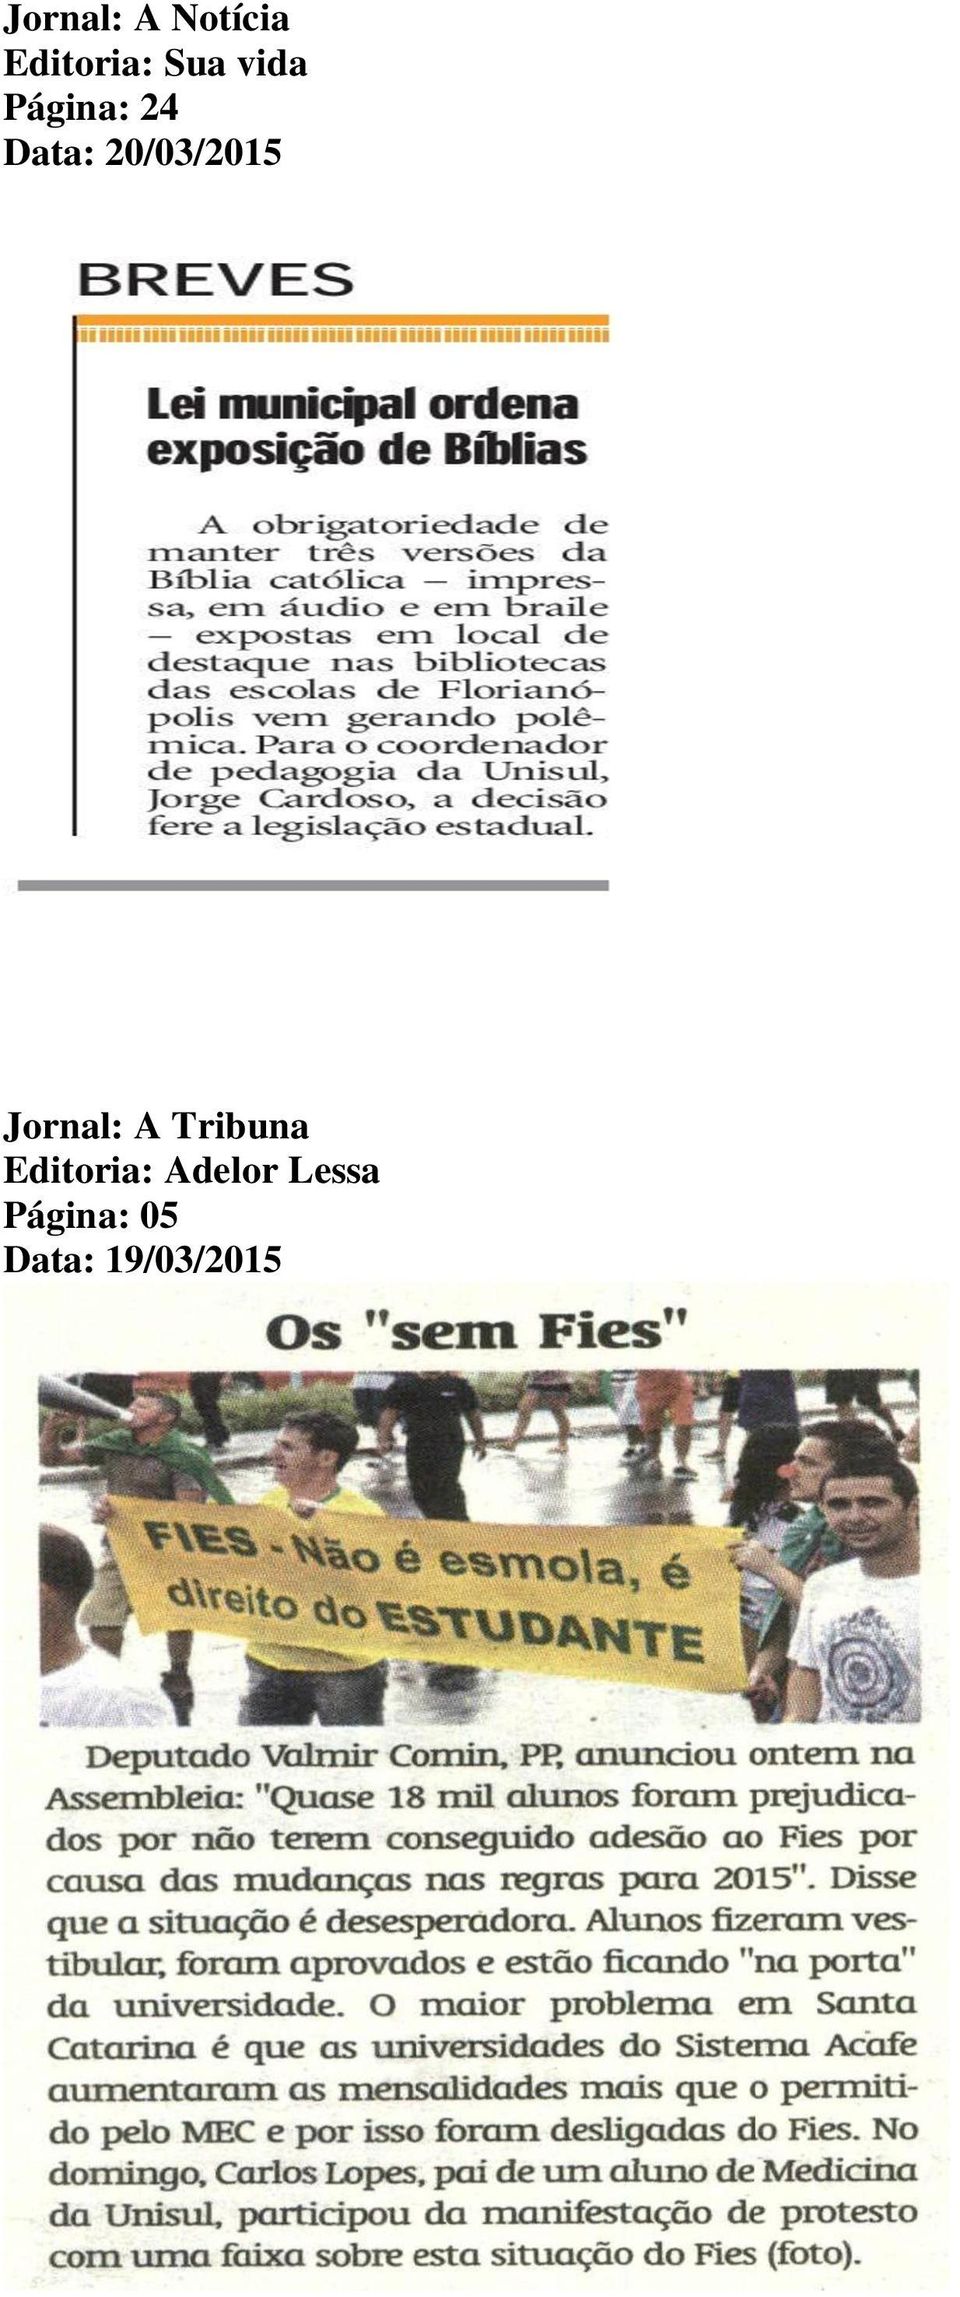 20/03/2015 Jornal: A Tribuna